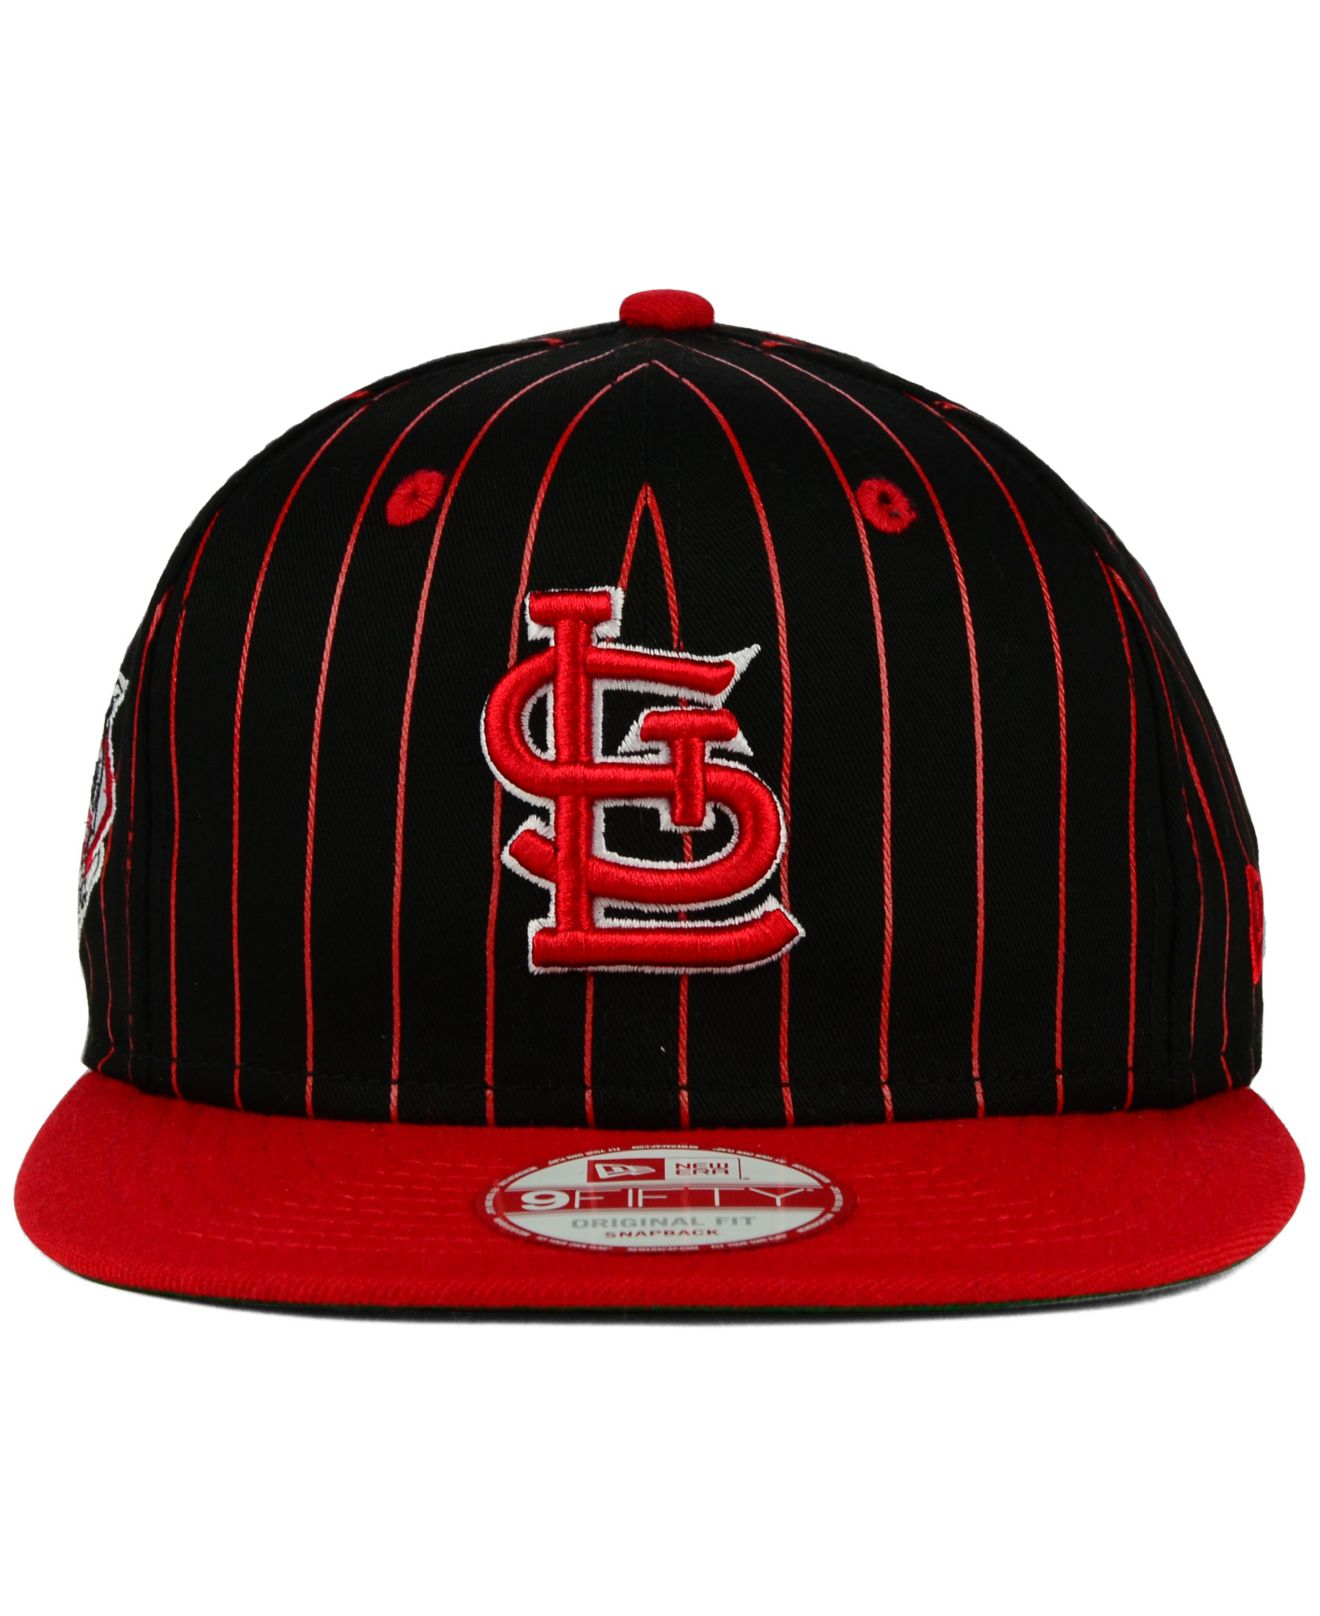 Vintage St Louis Cardinals Baseball Cap 